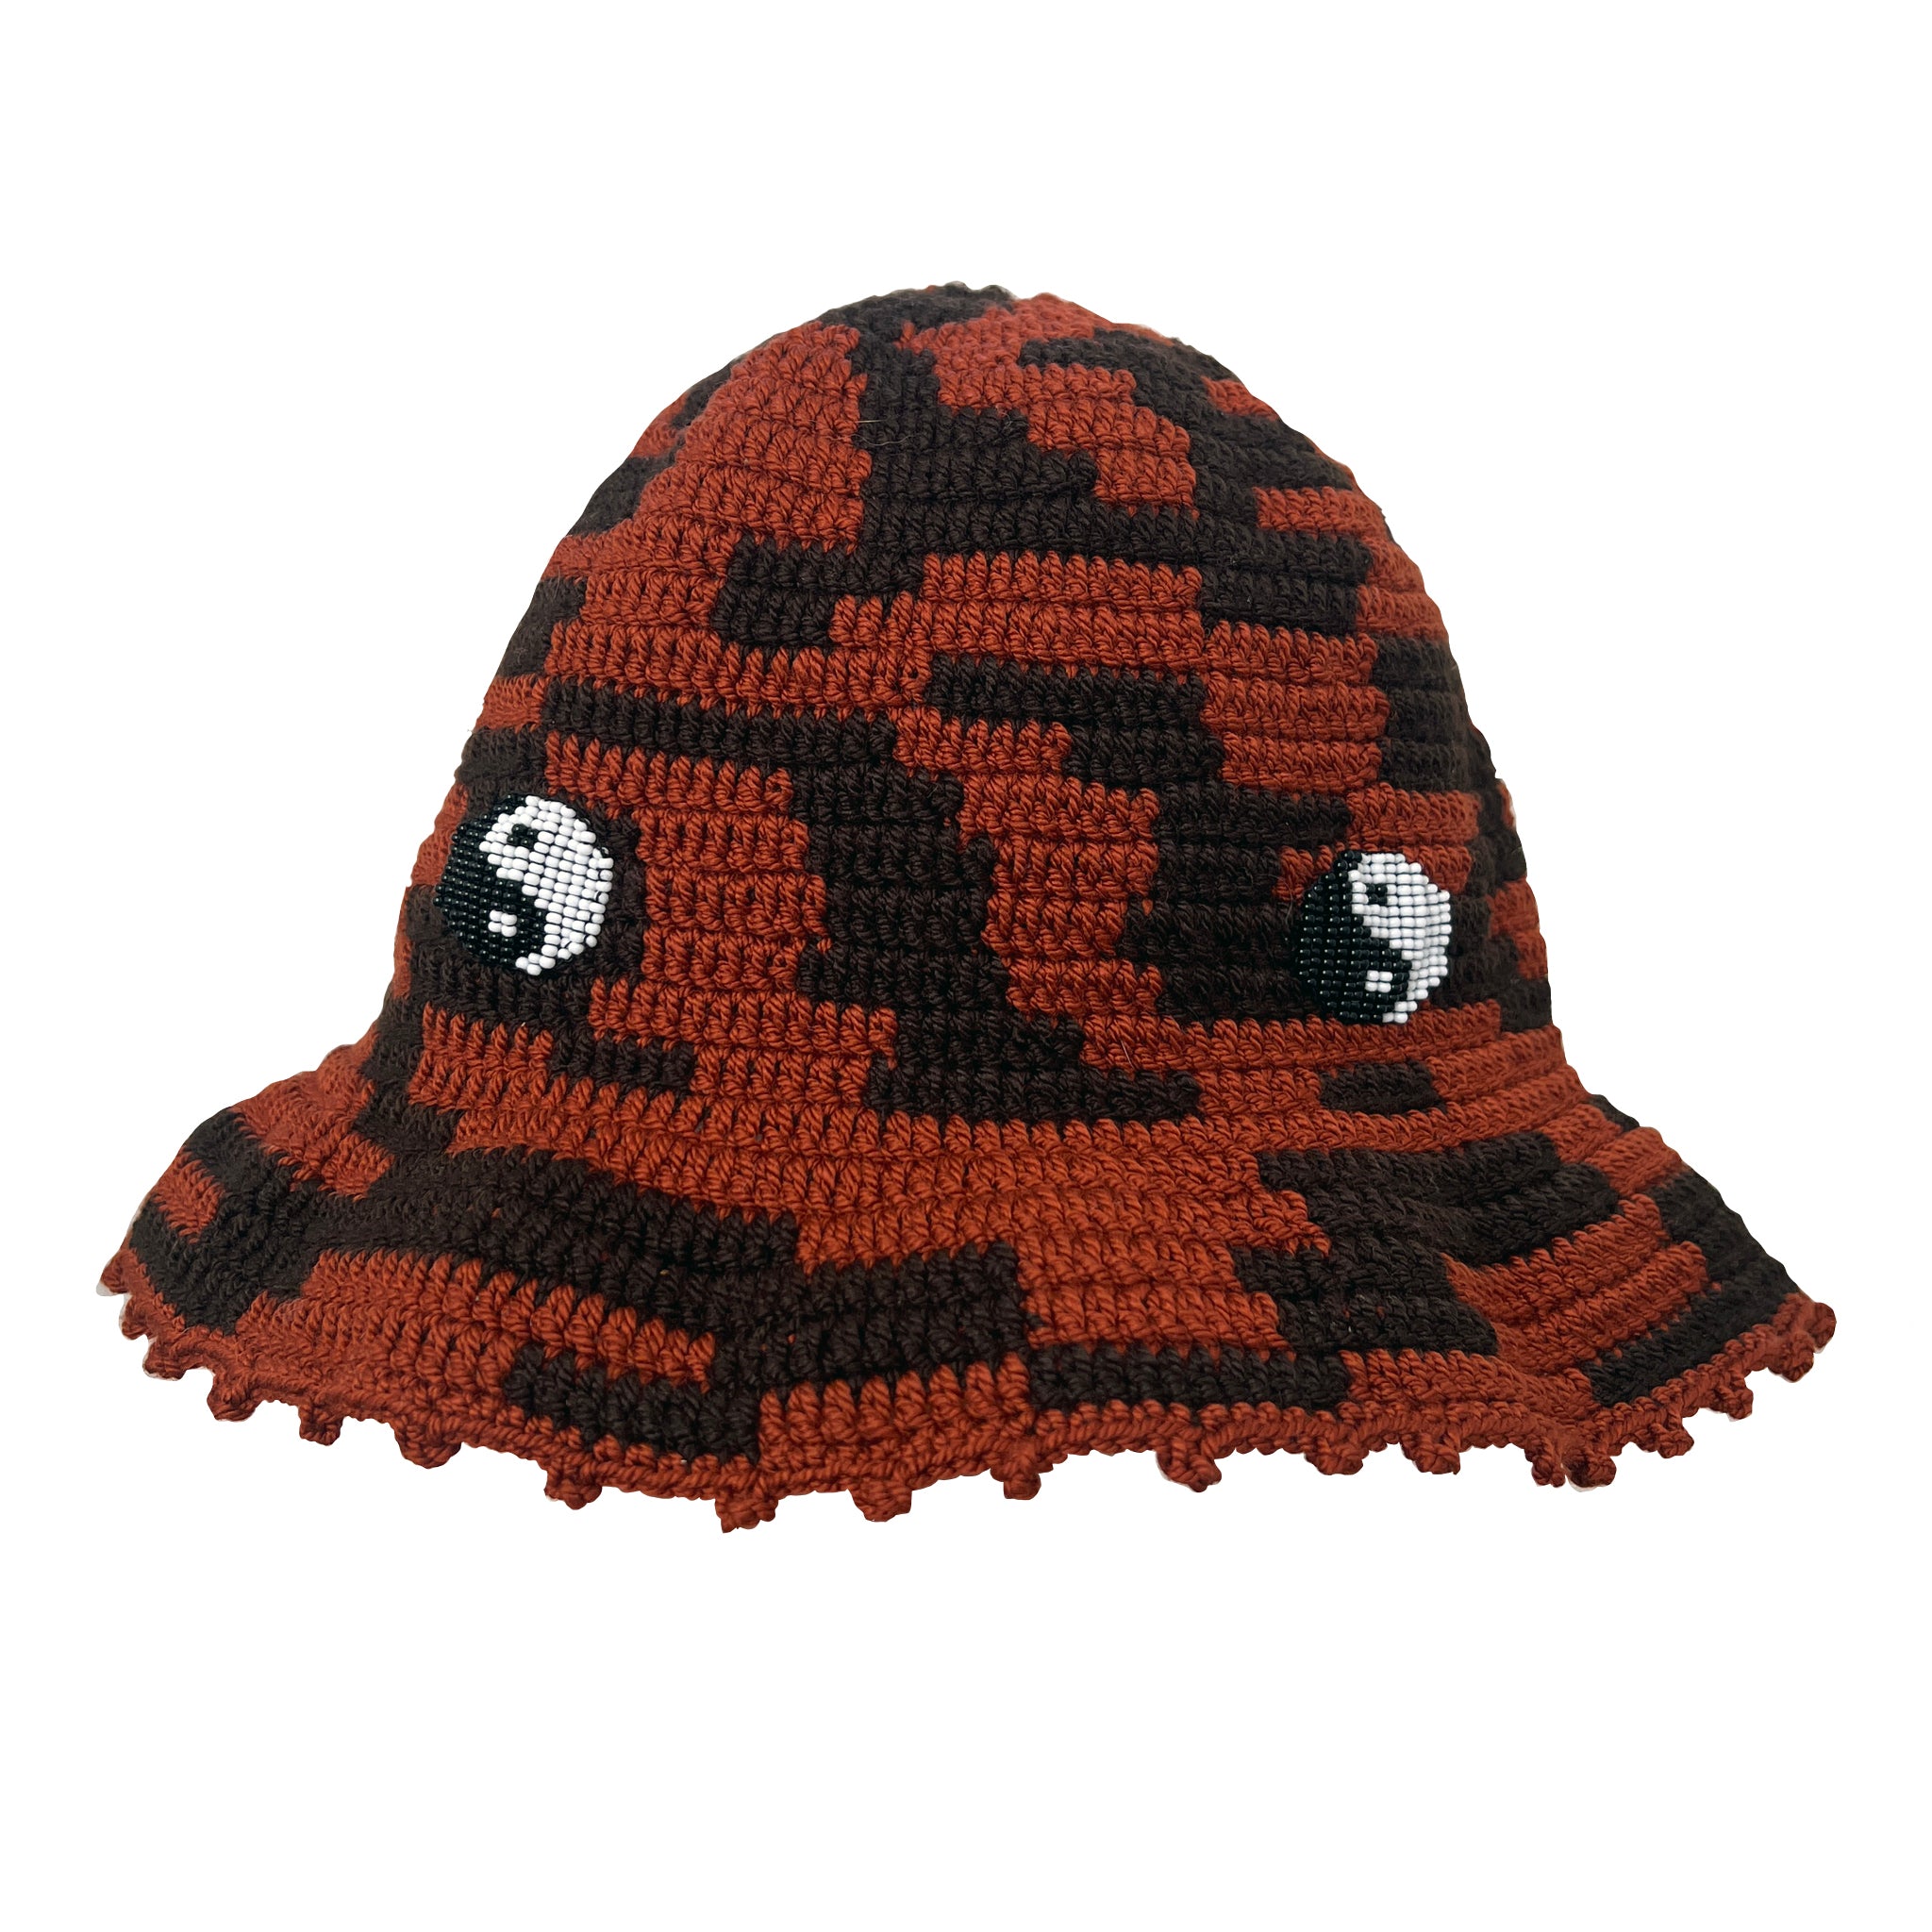 borwn and dark brown crochet hat with yin yang beaded embellishments